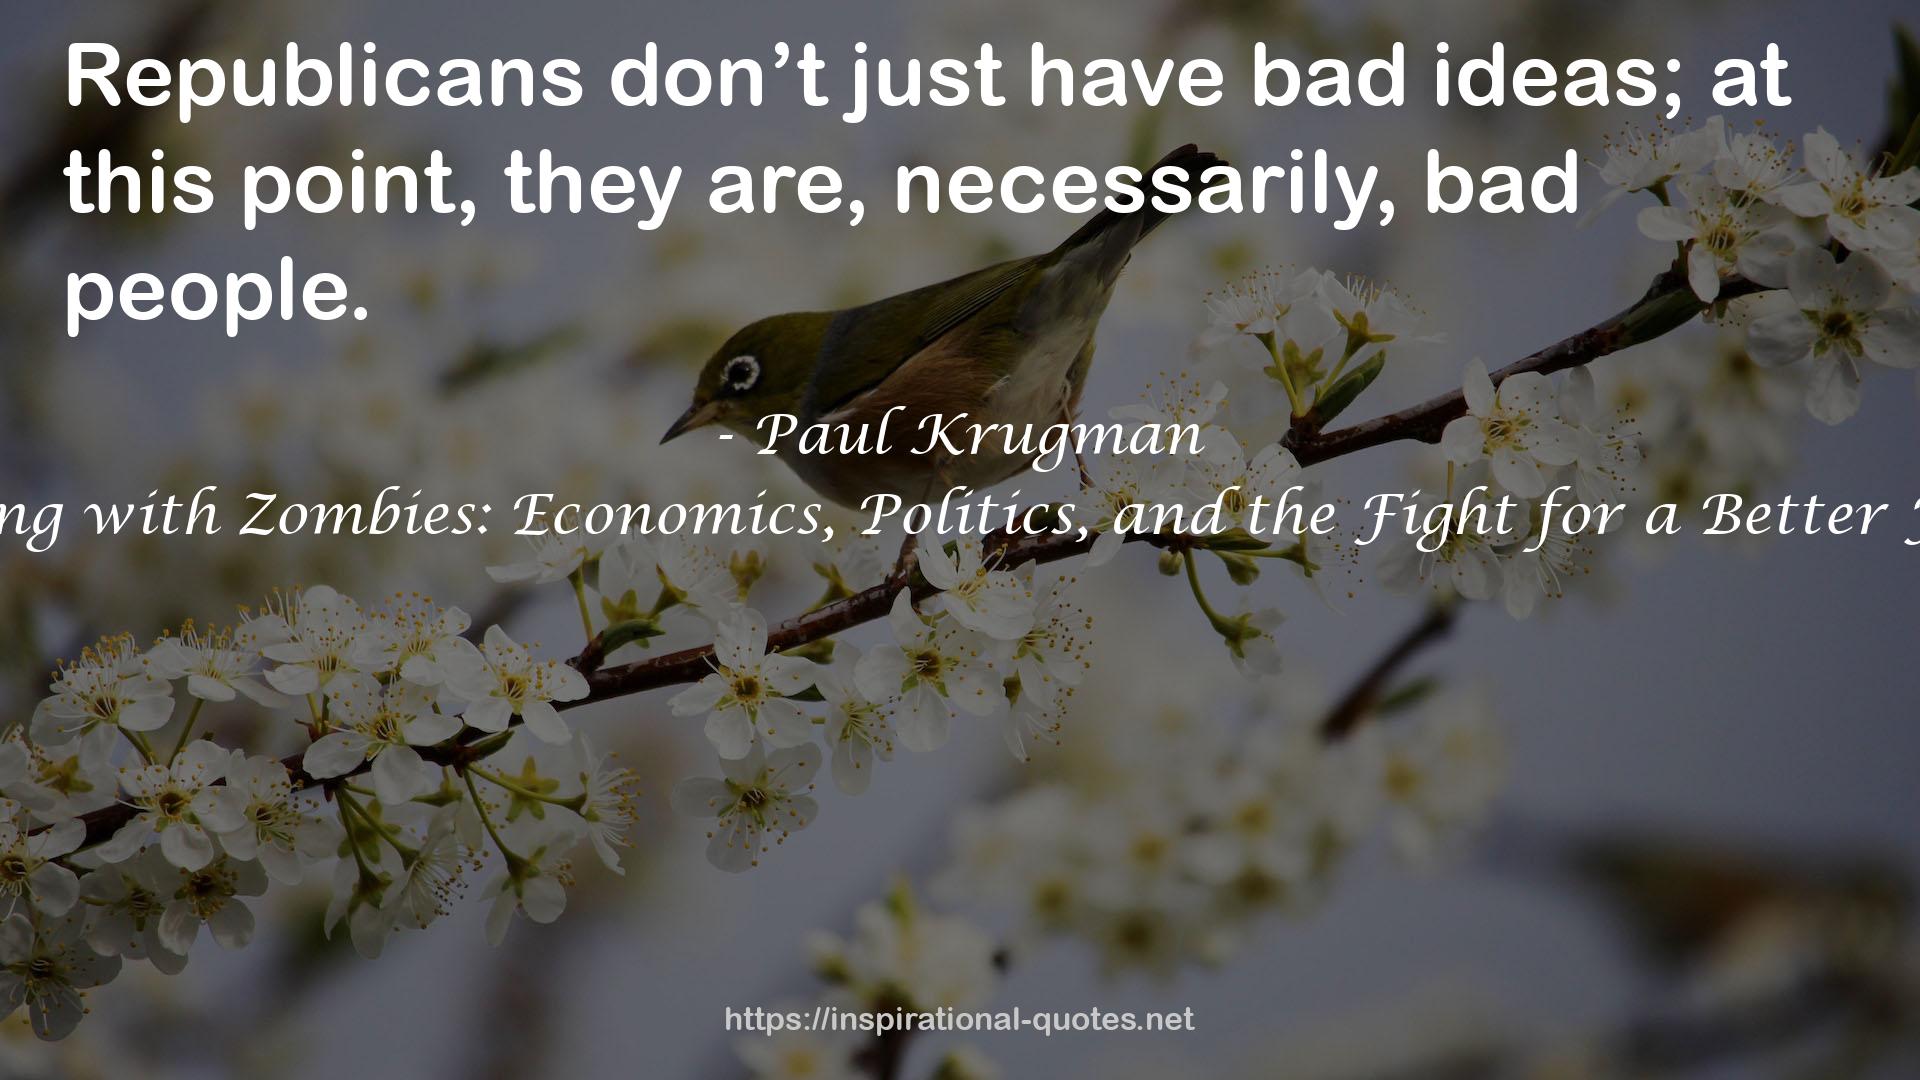 Paul Krugman QUOTES